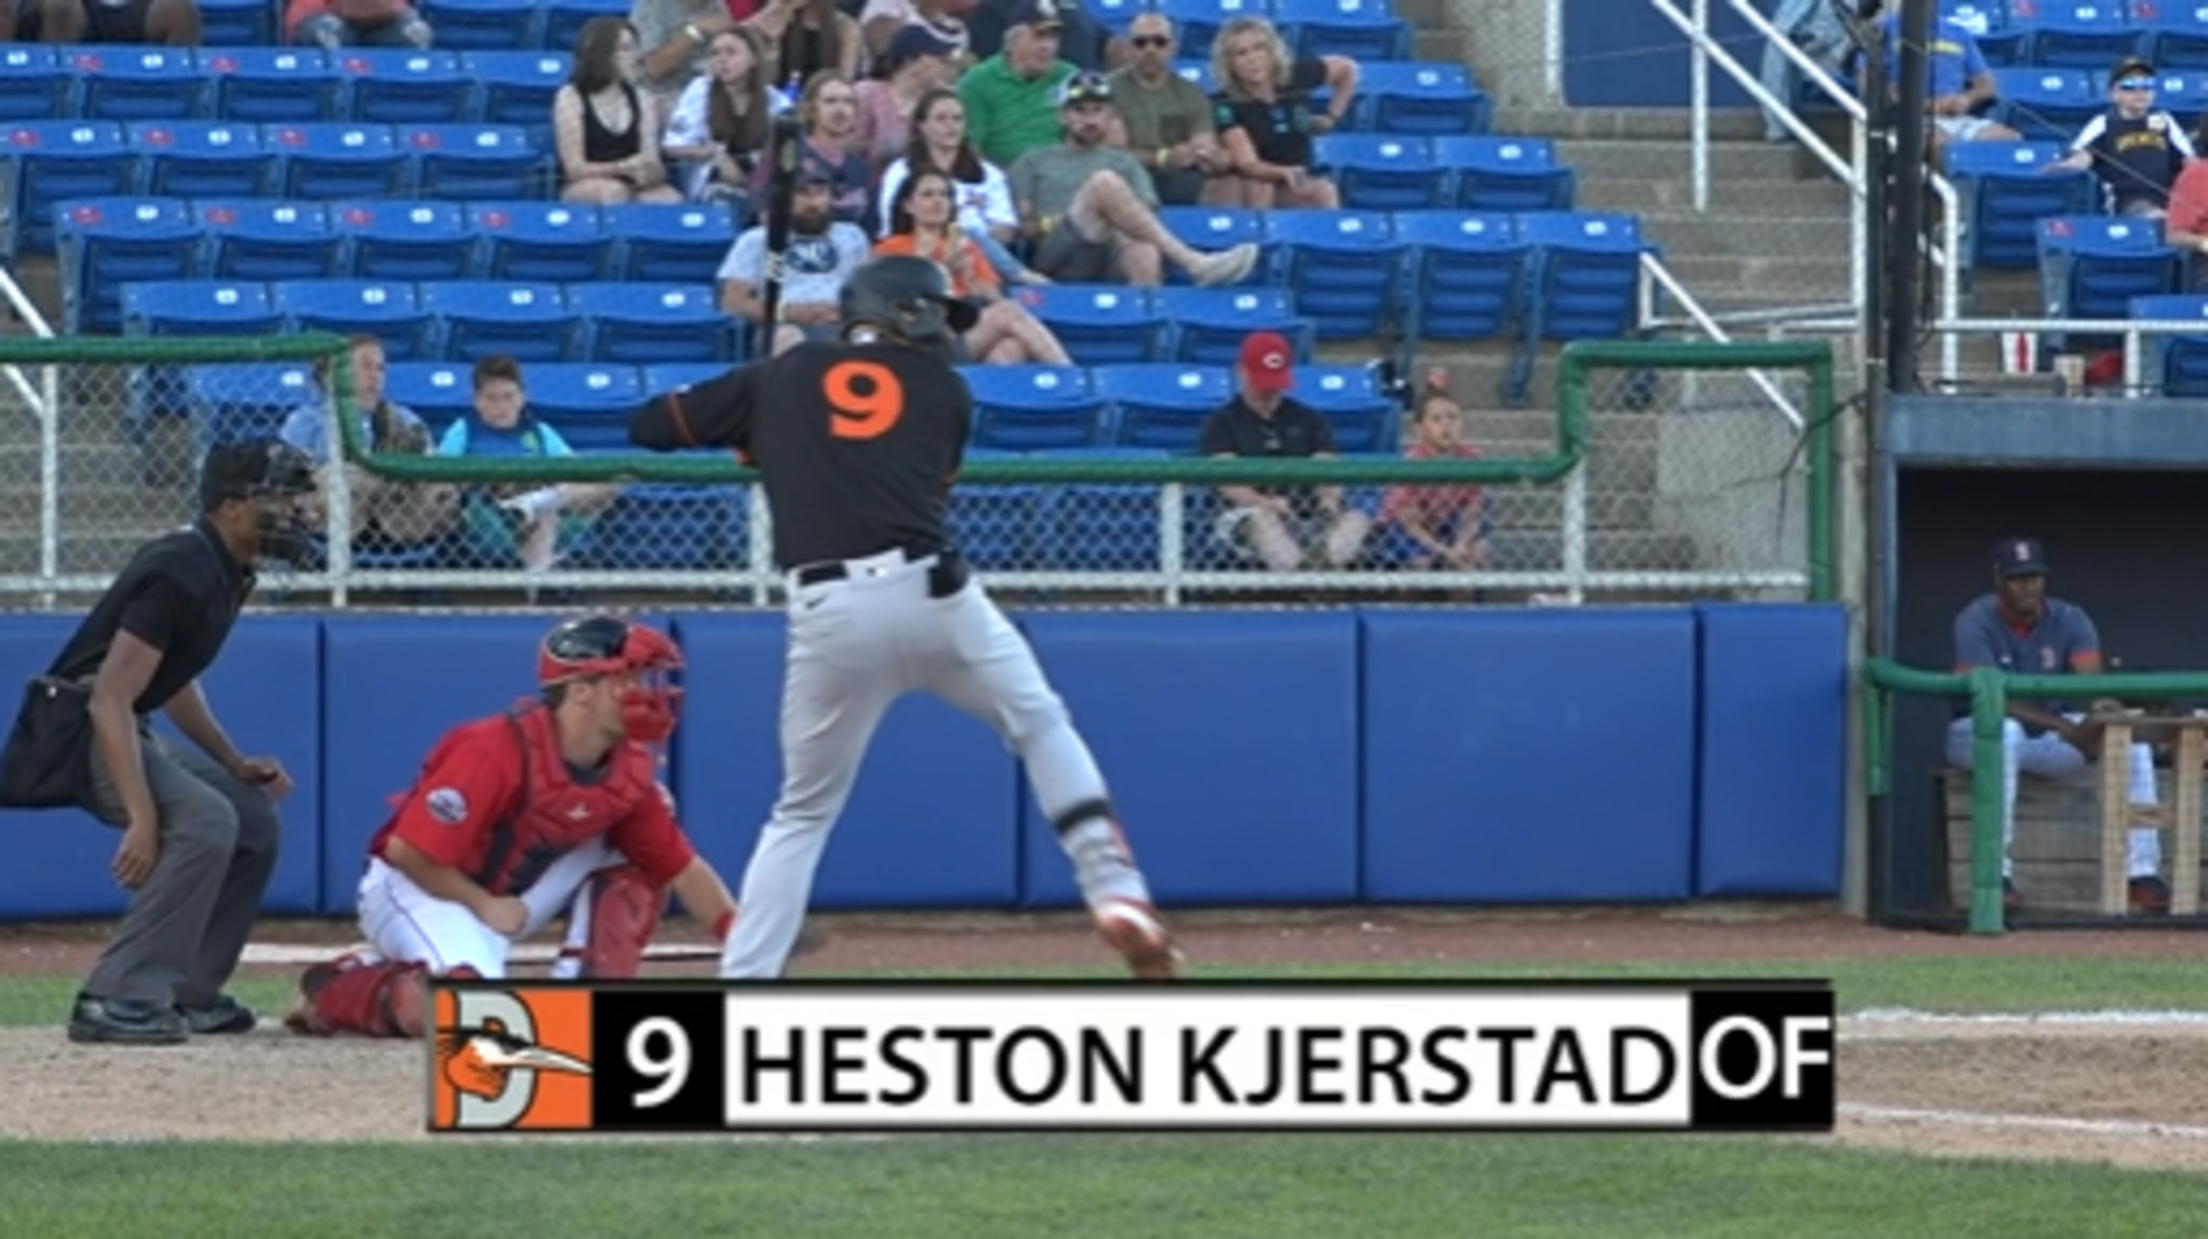 Kjerstad collects three hits